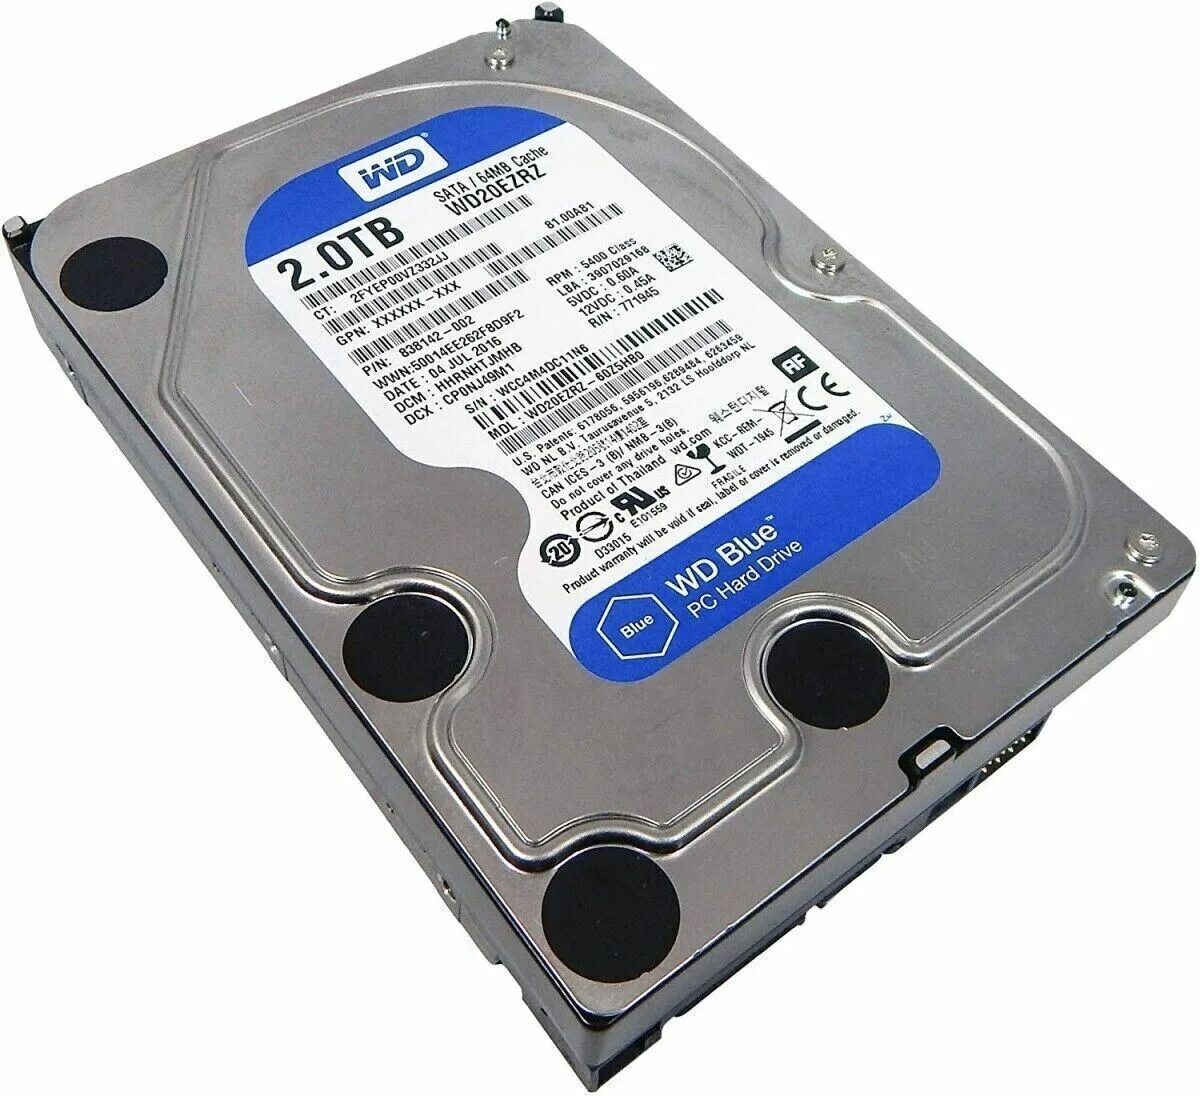 Western Digital WD Blue 2 ТБ wd20ezrz. Жесткий диск — WD Blue wd20ezrz 2тб. WD Blue 2 TB 7200 256. Жесткий диск 3.5" 2тб WD Blue (wd20ezaz). Купить жесткий на 2 терабайта